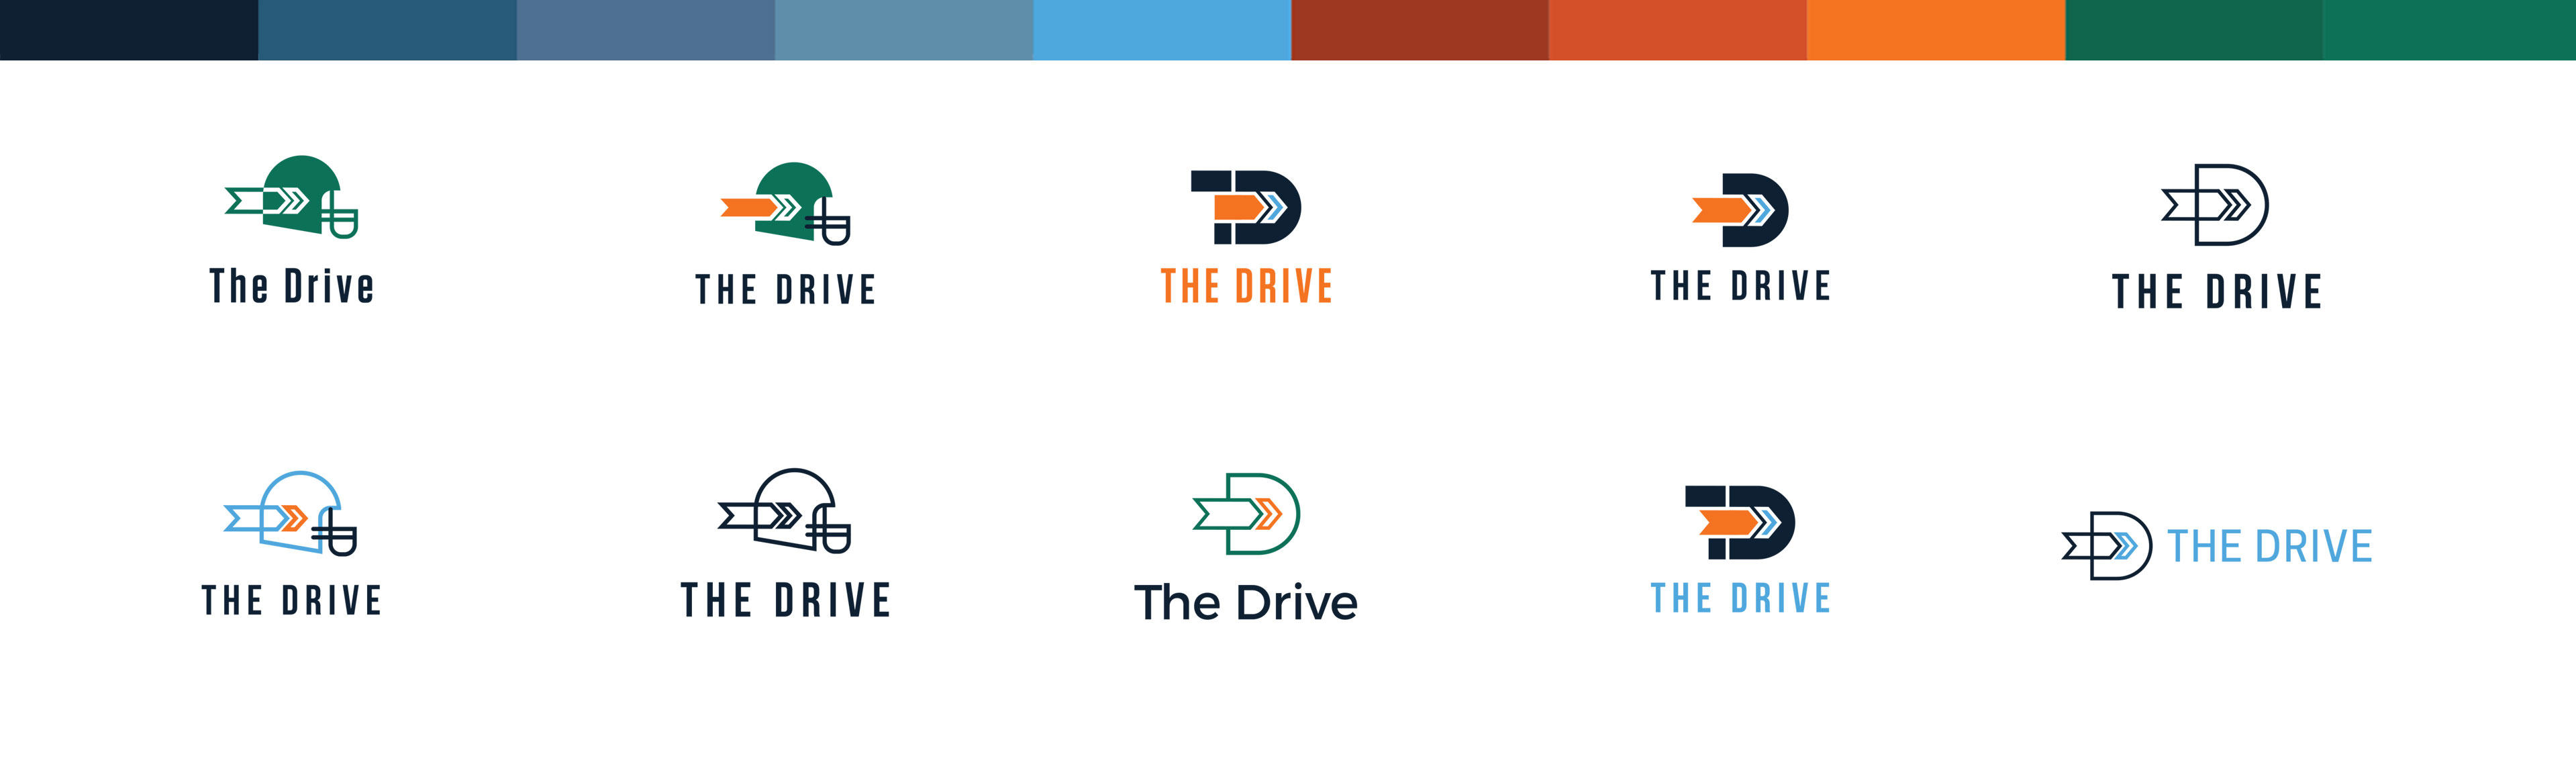 TheDrive_Logos